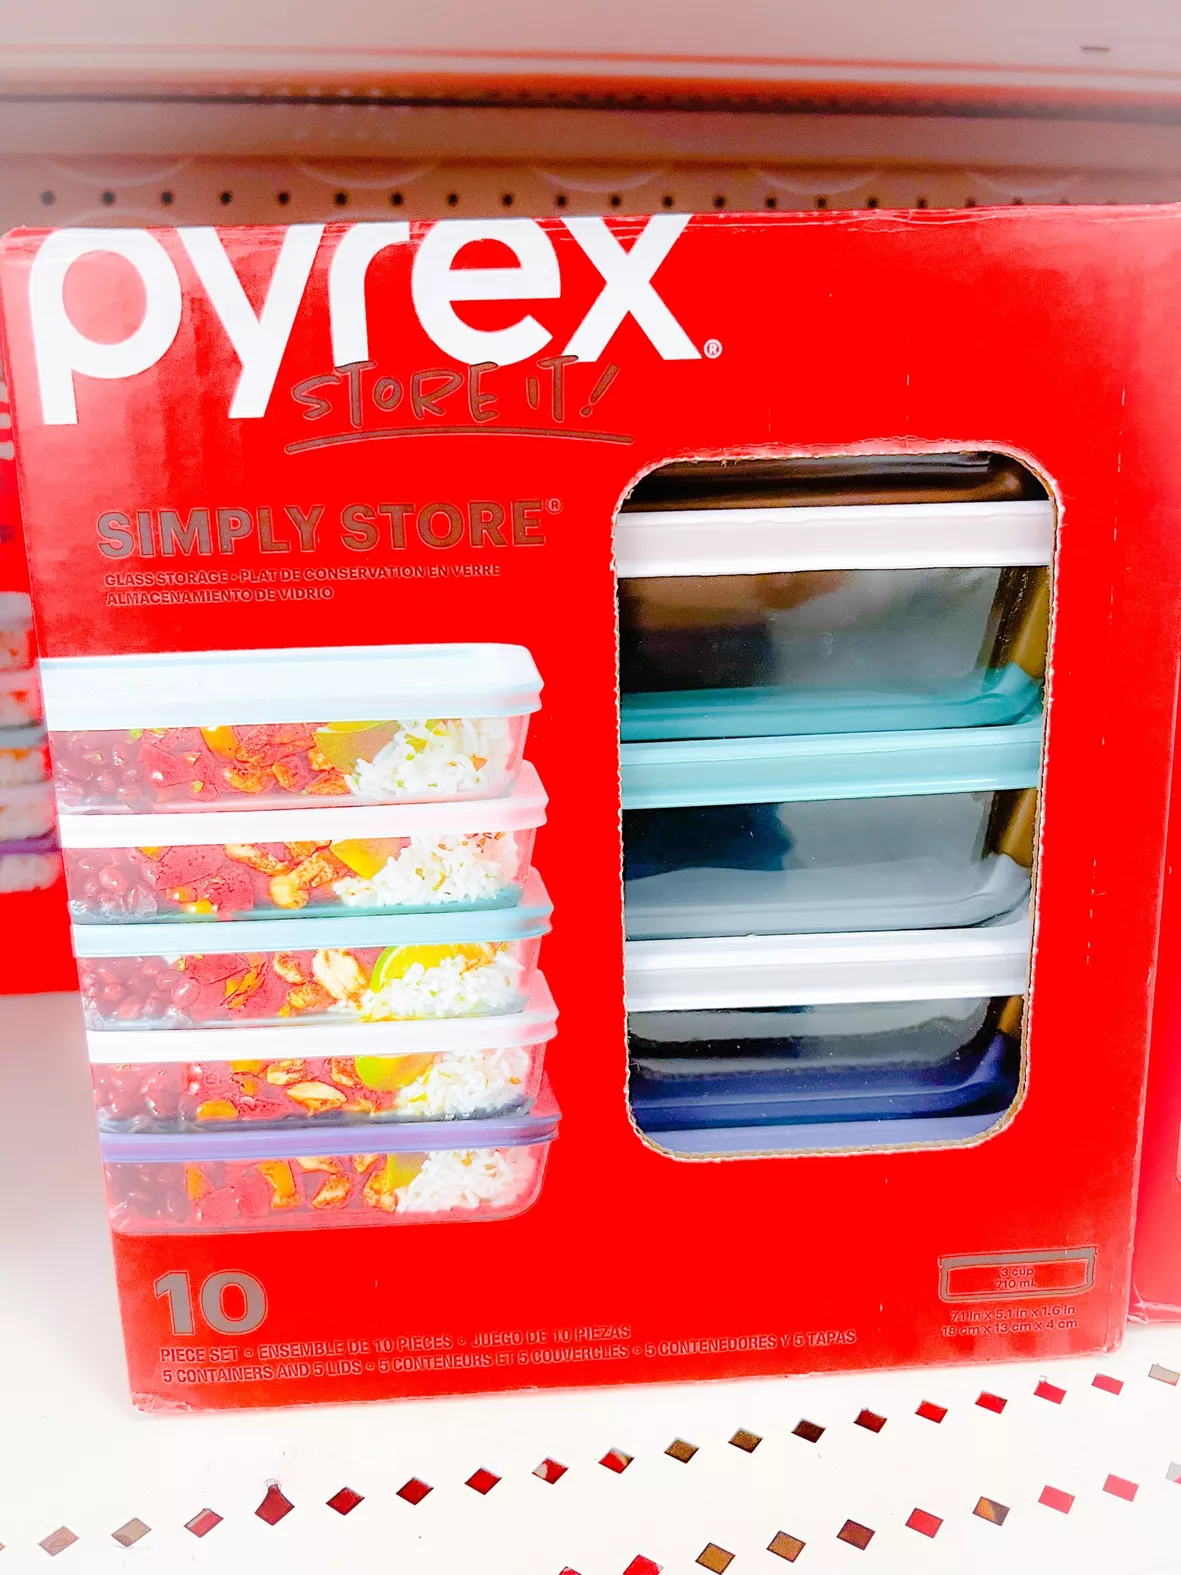 Pyrex 18pc Glass Storage Set : Target